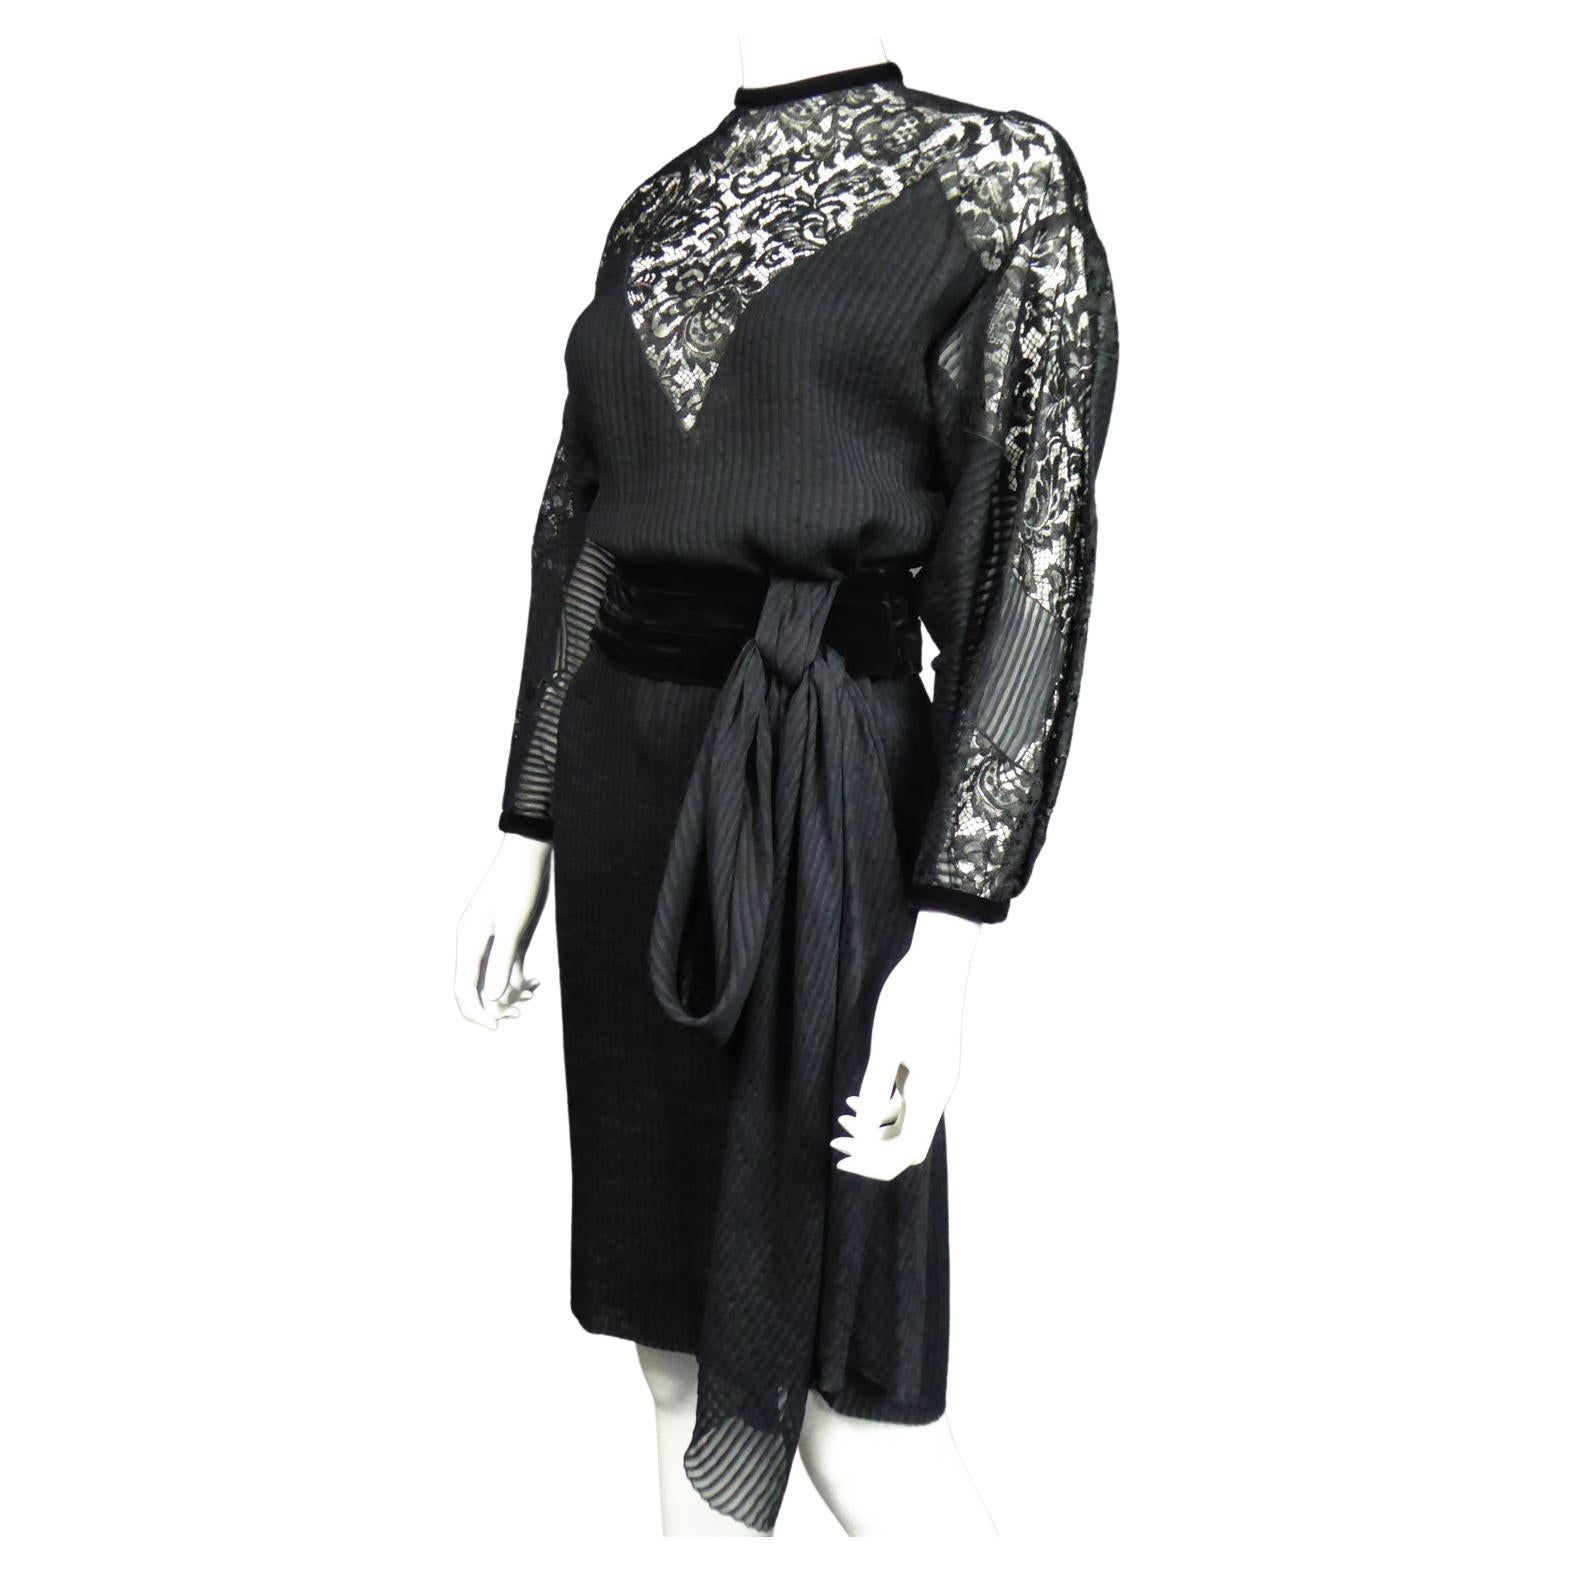 A Christian Dior-Marc Bohan Little Black Dress numbered 15843 Spring Summer 1982